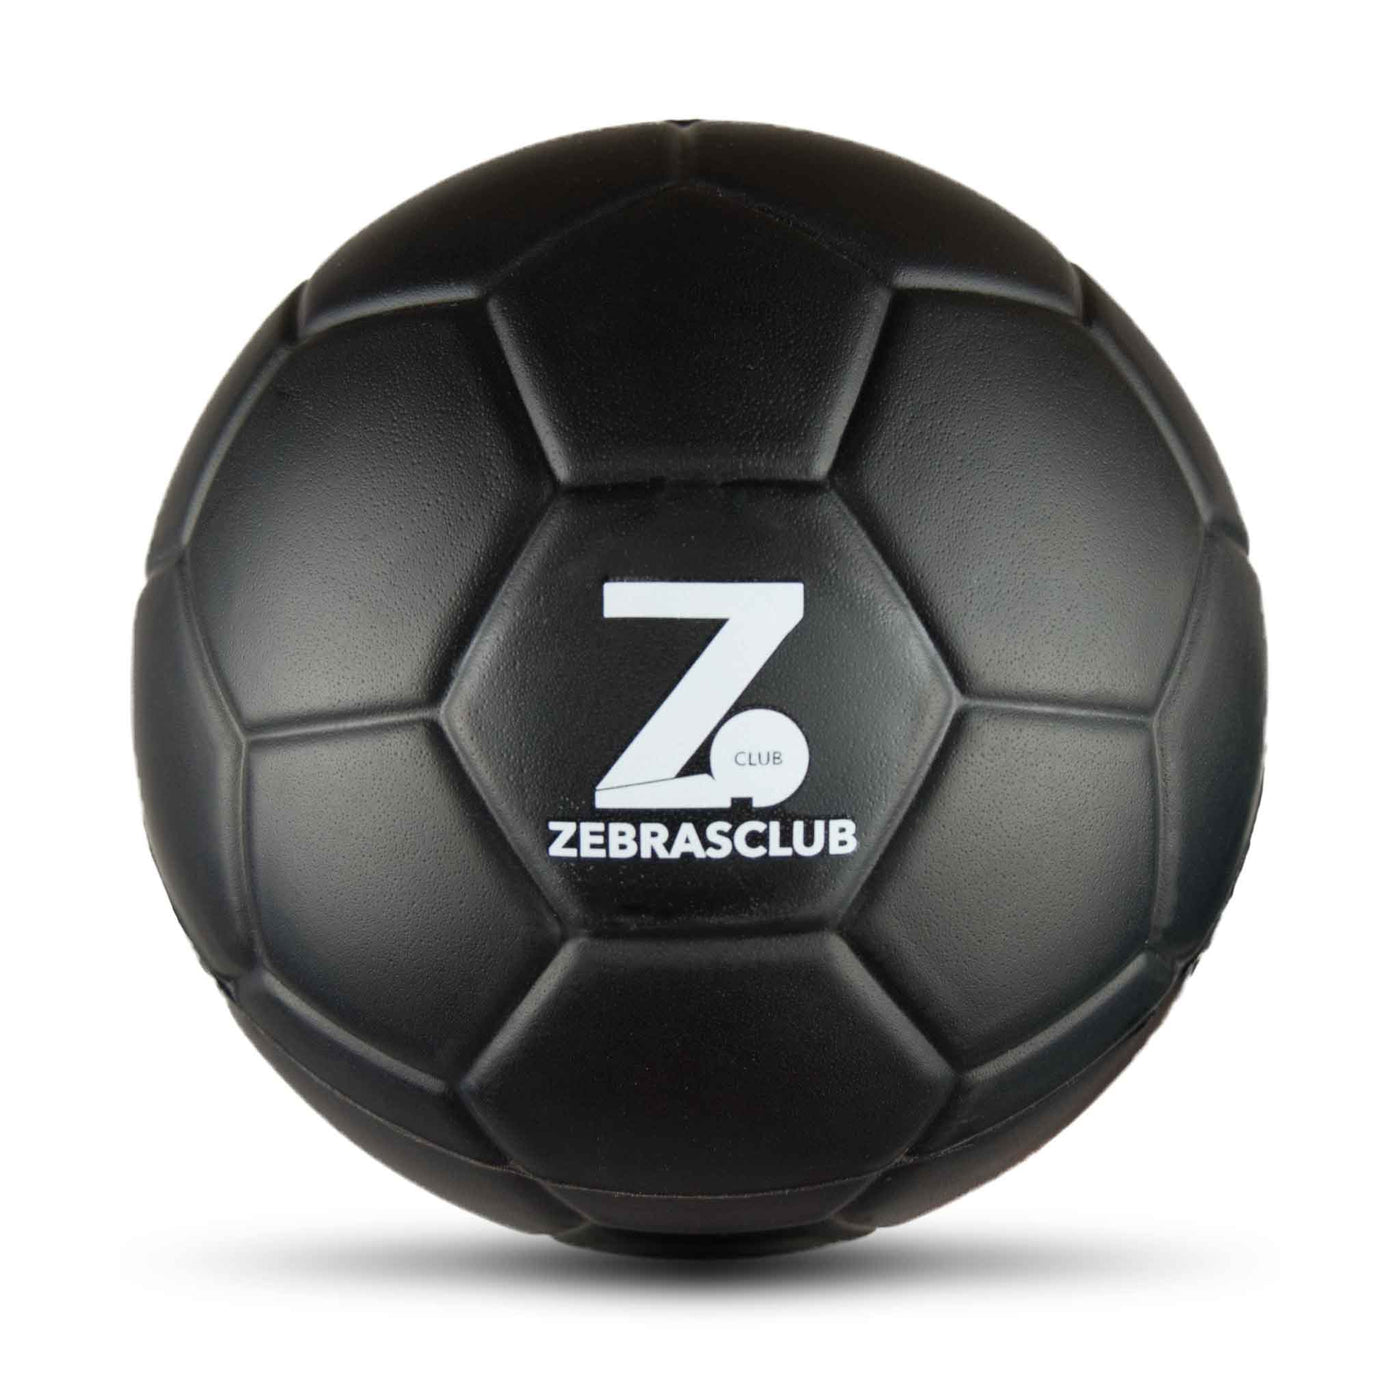 Zebrasclub 15cm Black Foam Ball Front Close